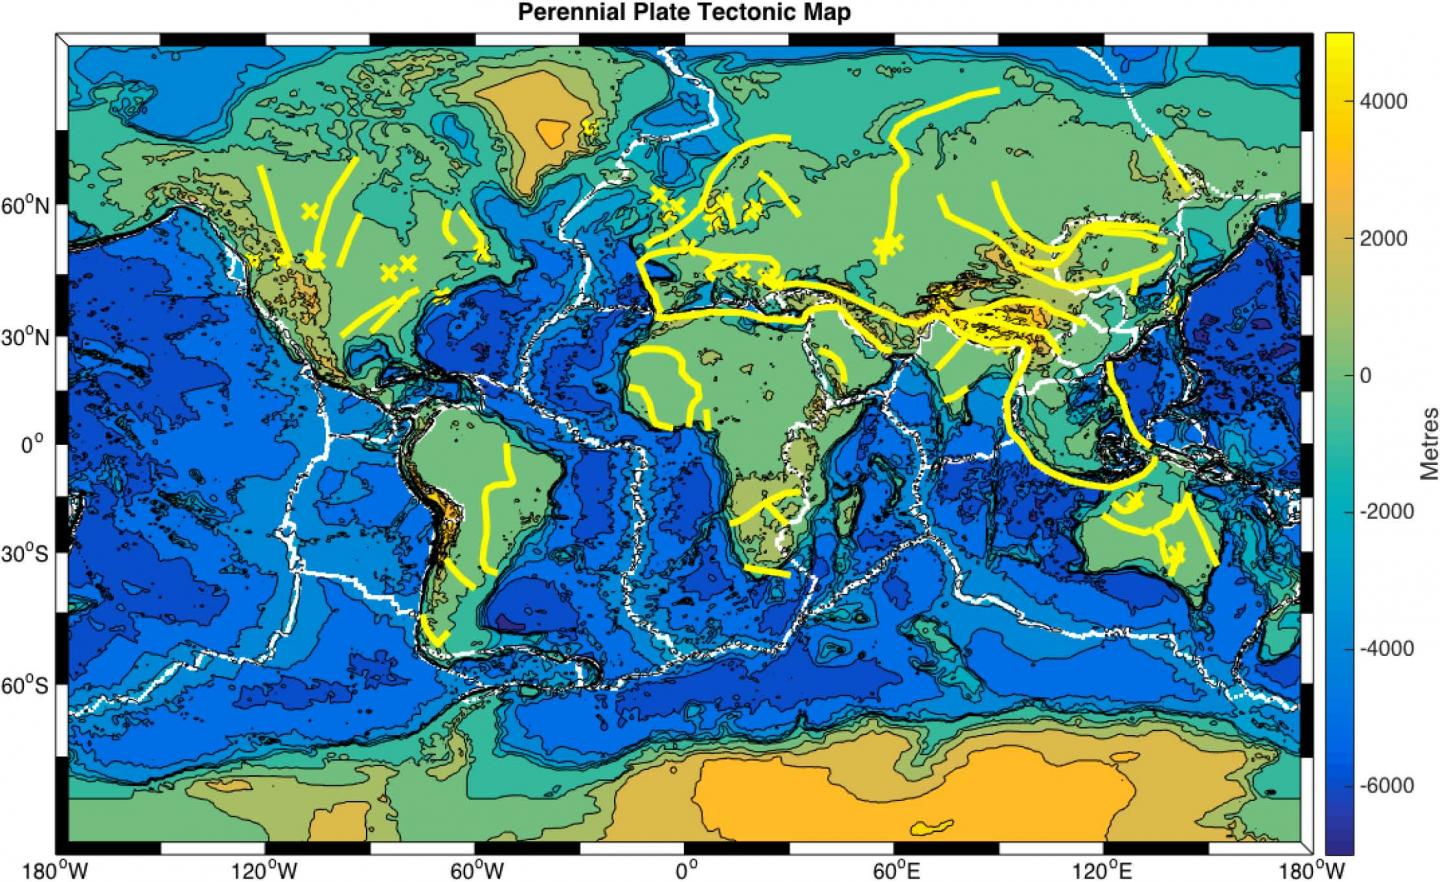 Perennial Plate Tectonics (1 of 2)